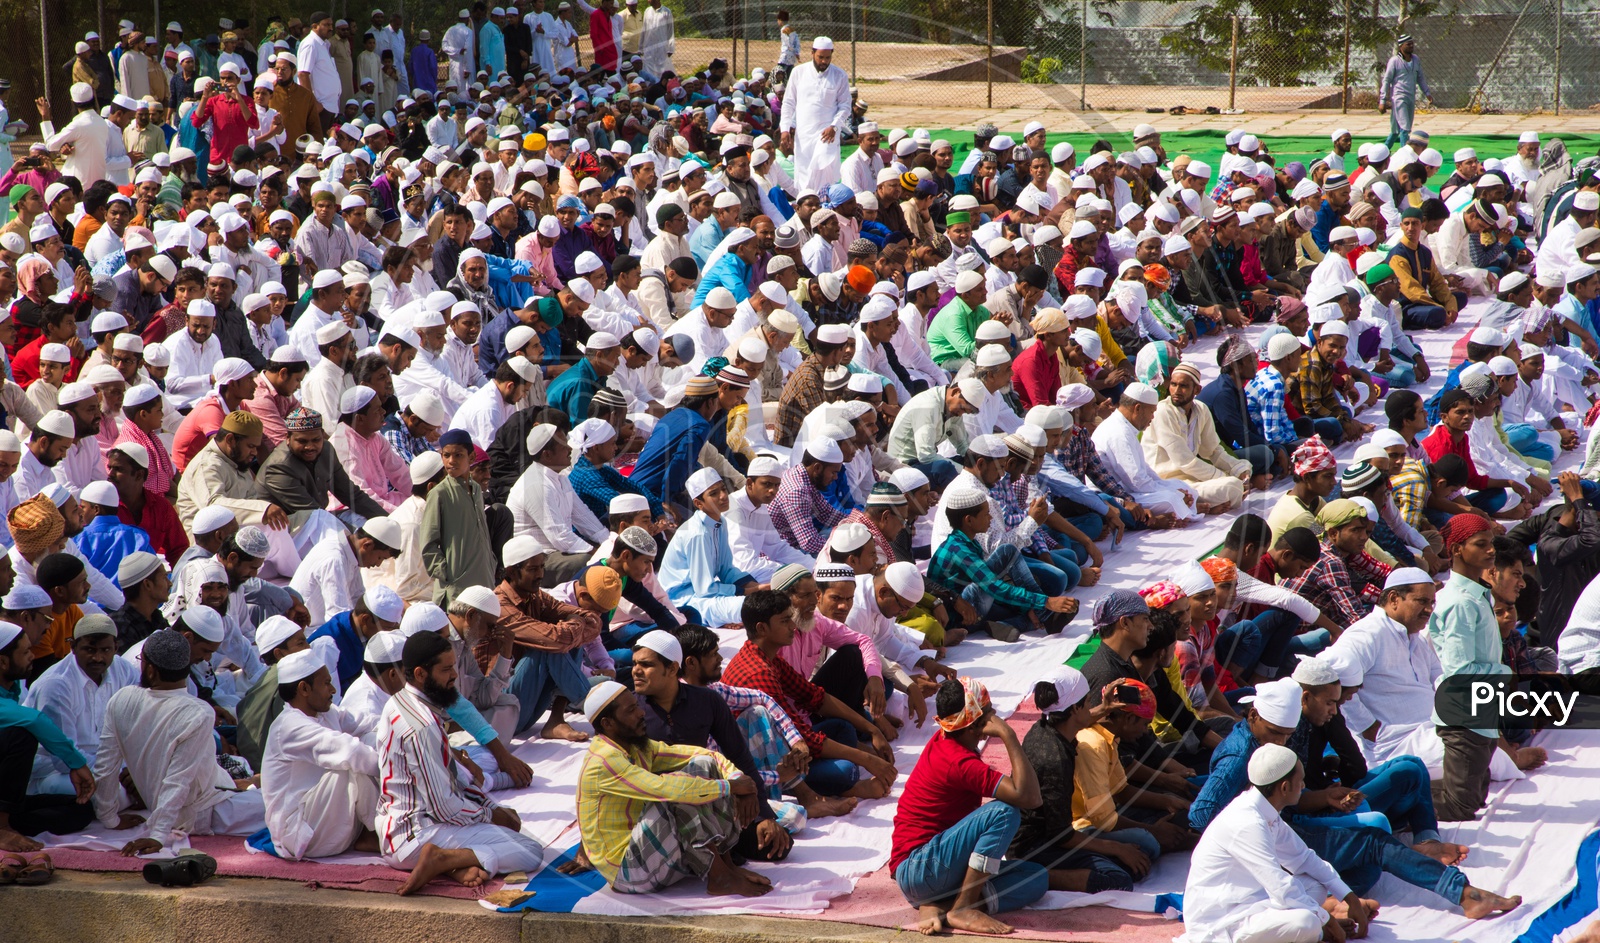 Eid prayer meet at Qutb Shahi Tombs in Hyderabad